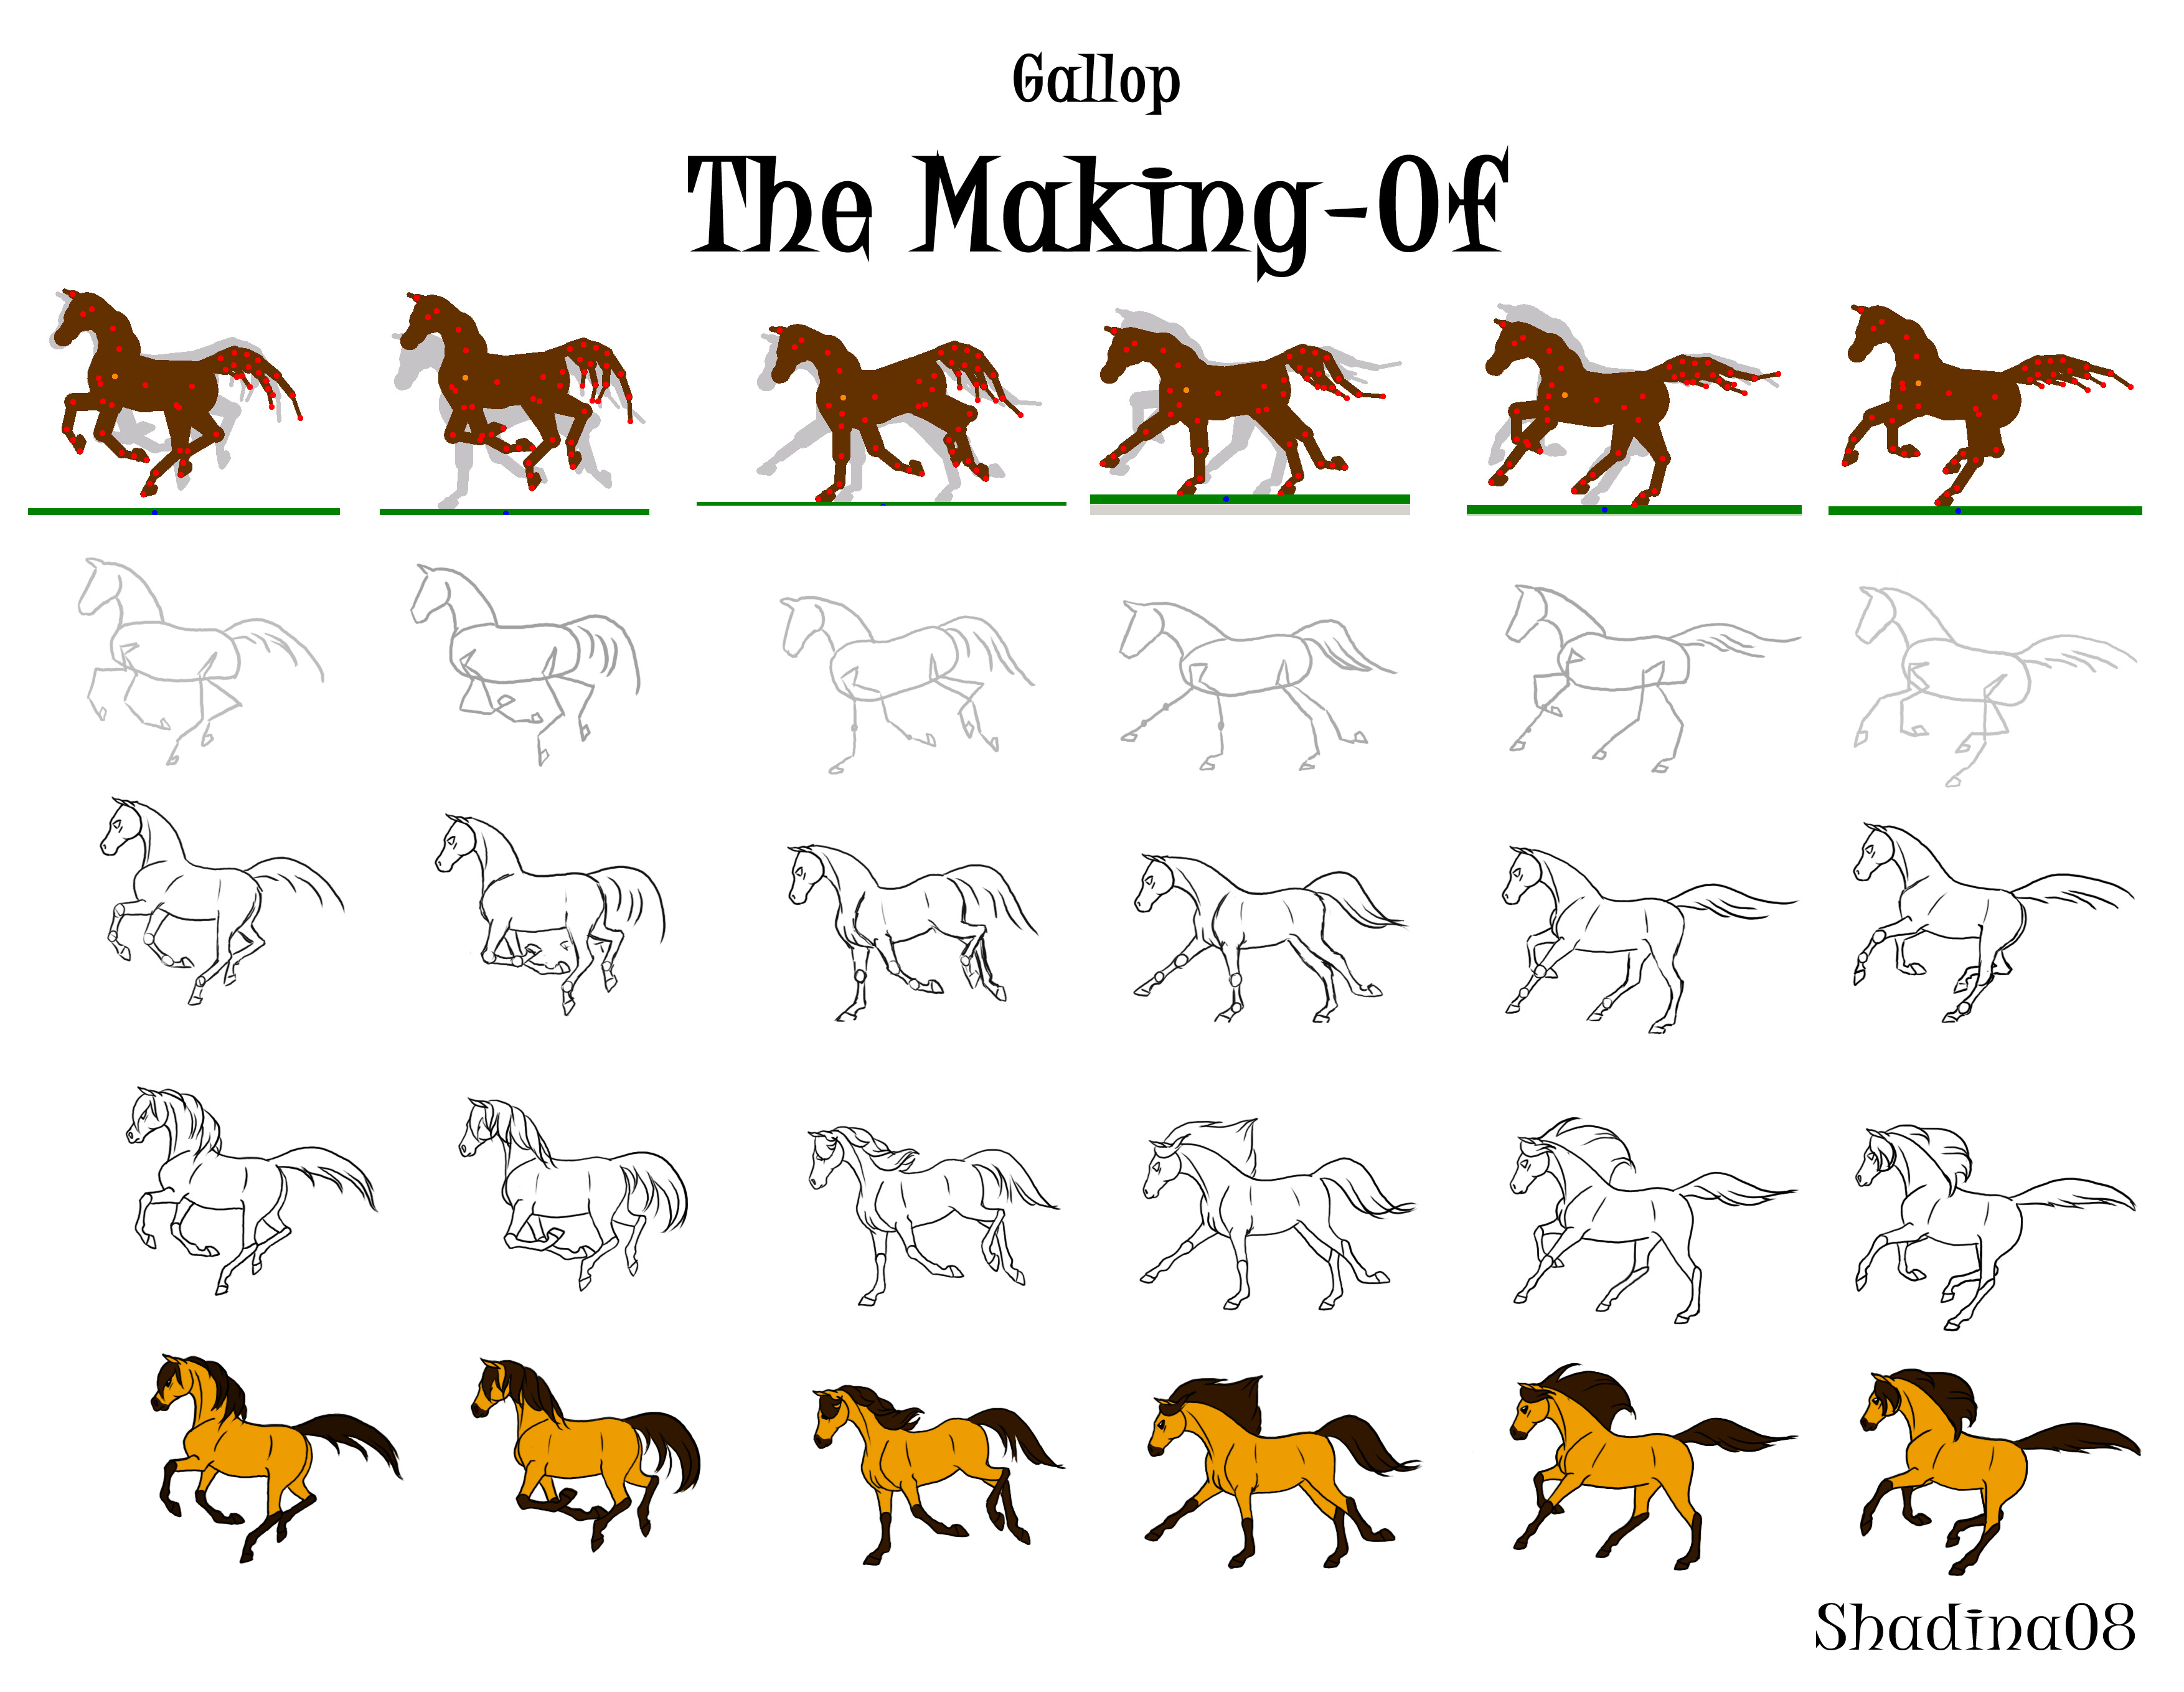 Gallop: The Making Of by ShadinaLonesea